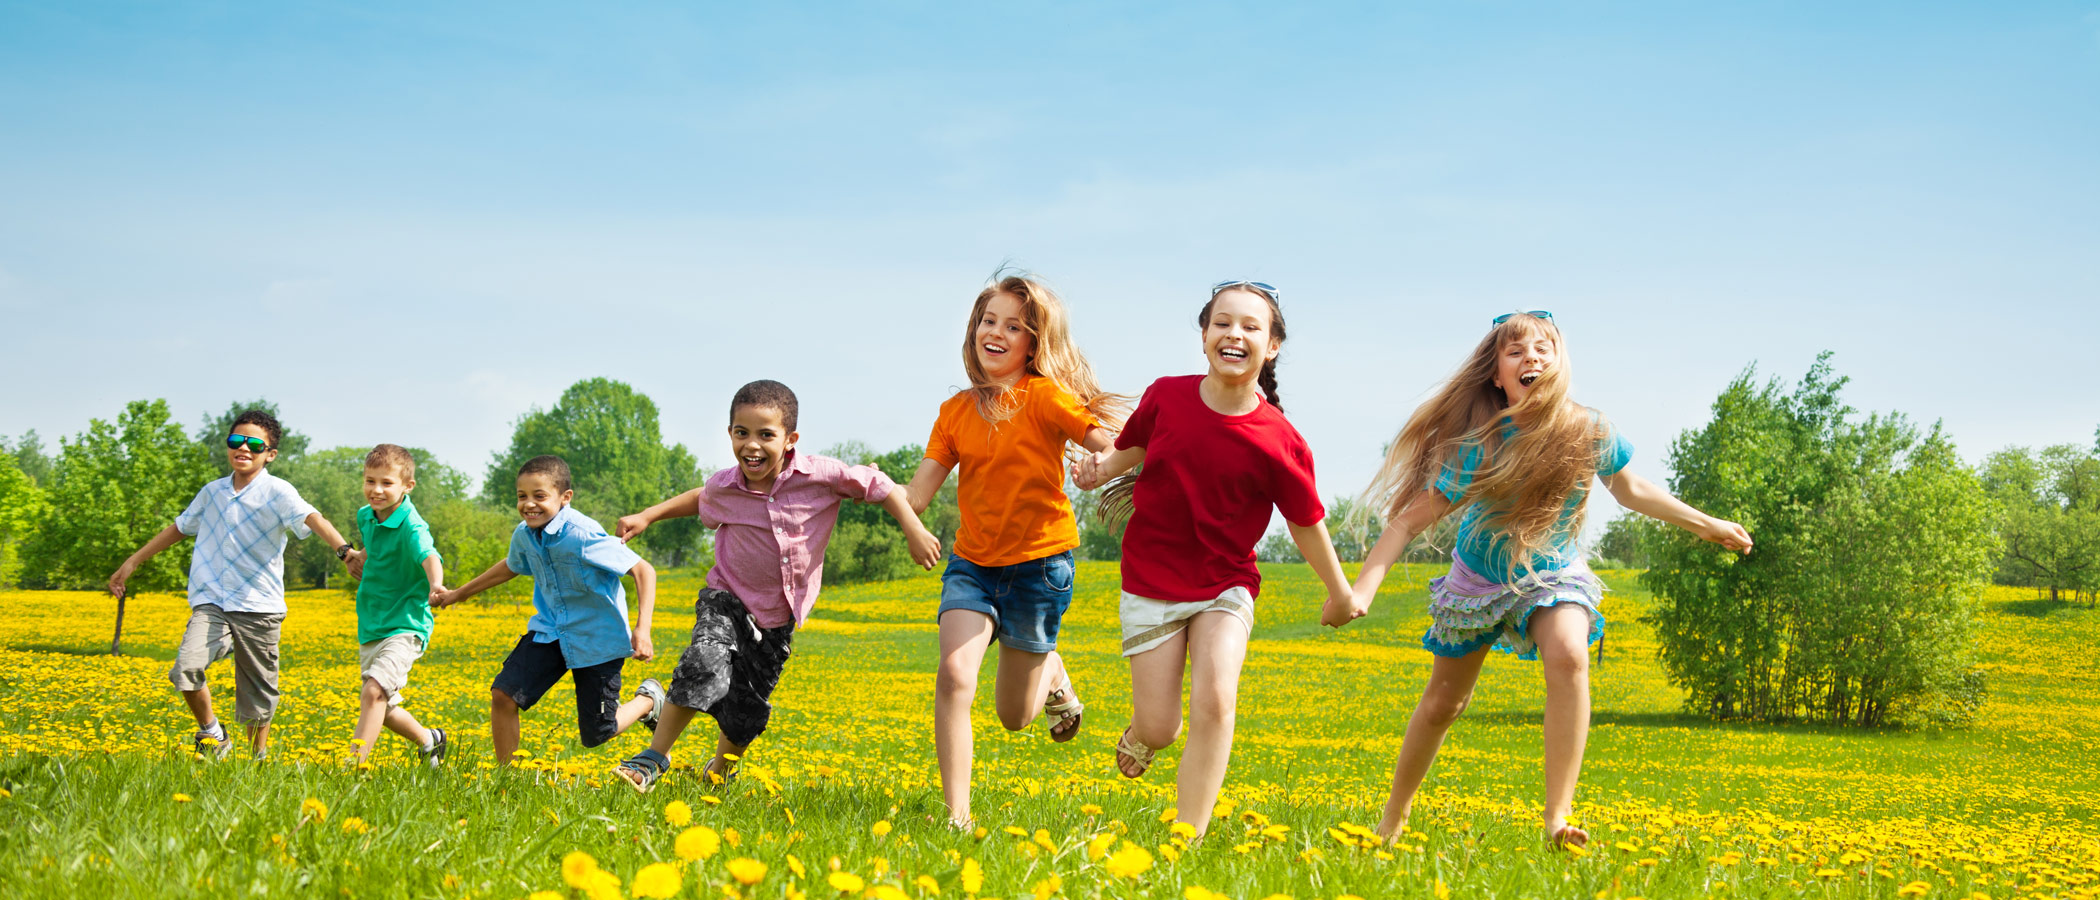 Children running in a field of flowers